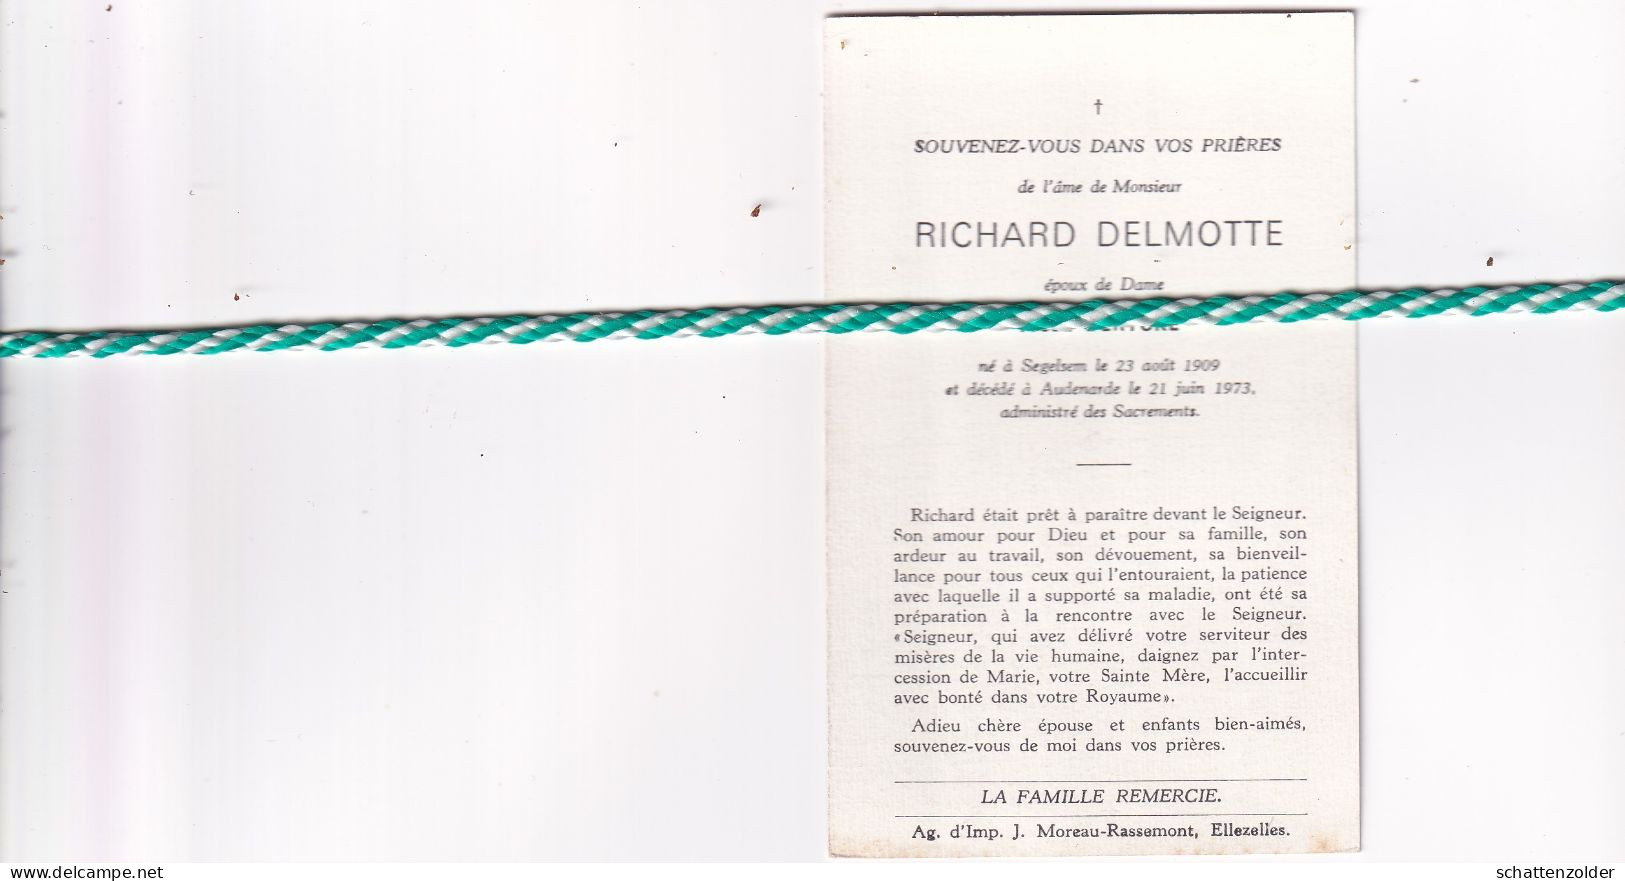 Richard Delmotte-Derycke, Segelsem 1909, Audenarde 1973 - Overlijden